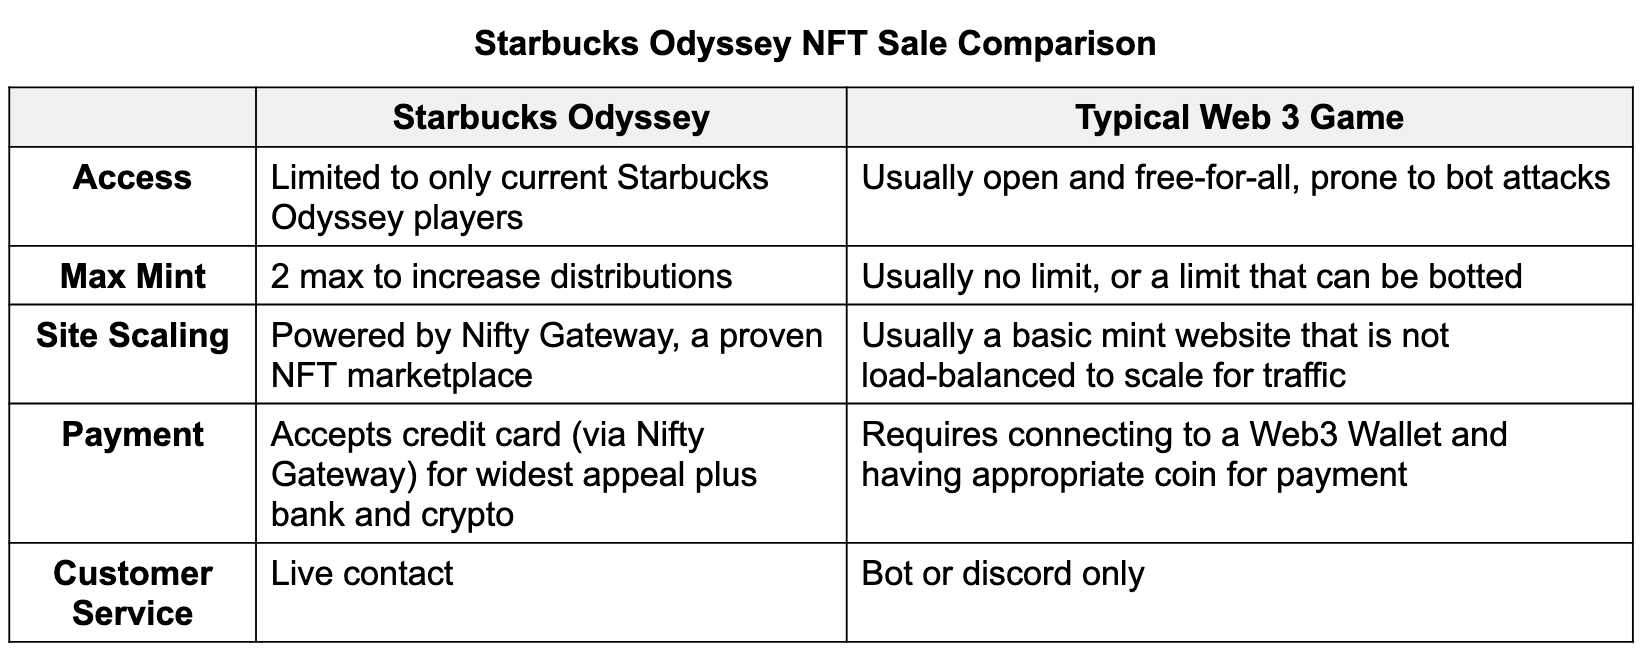 Starbucks Odyssey NFT Sale Comparison